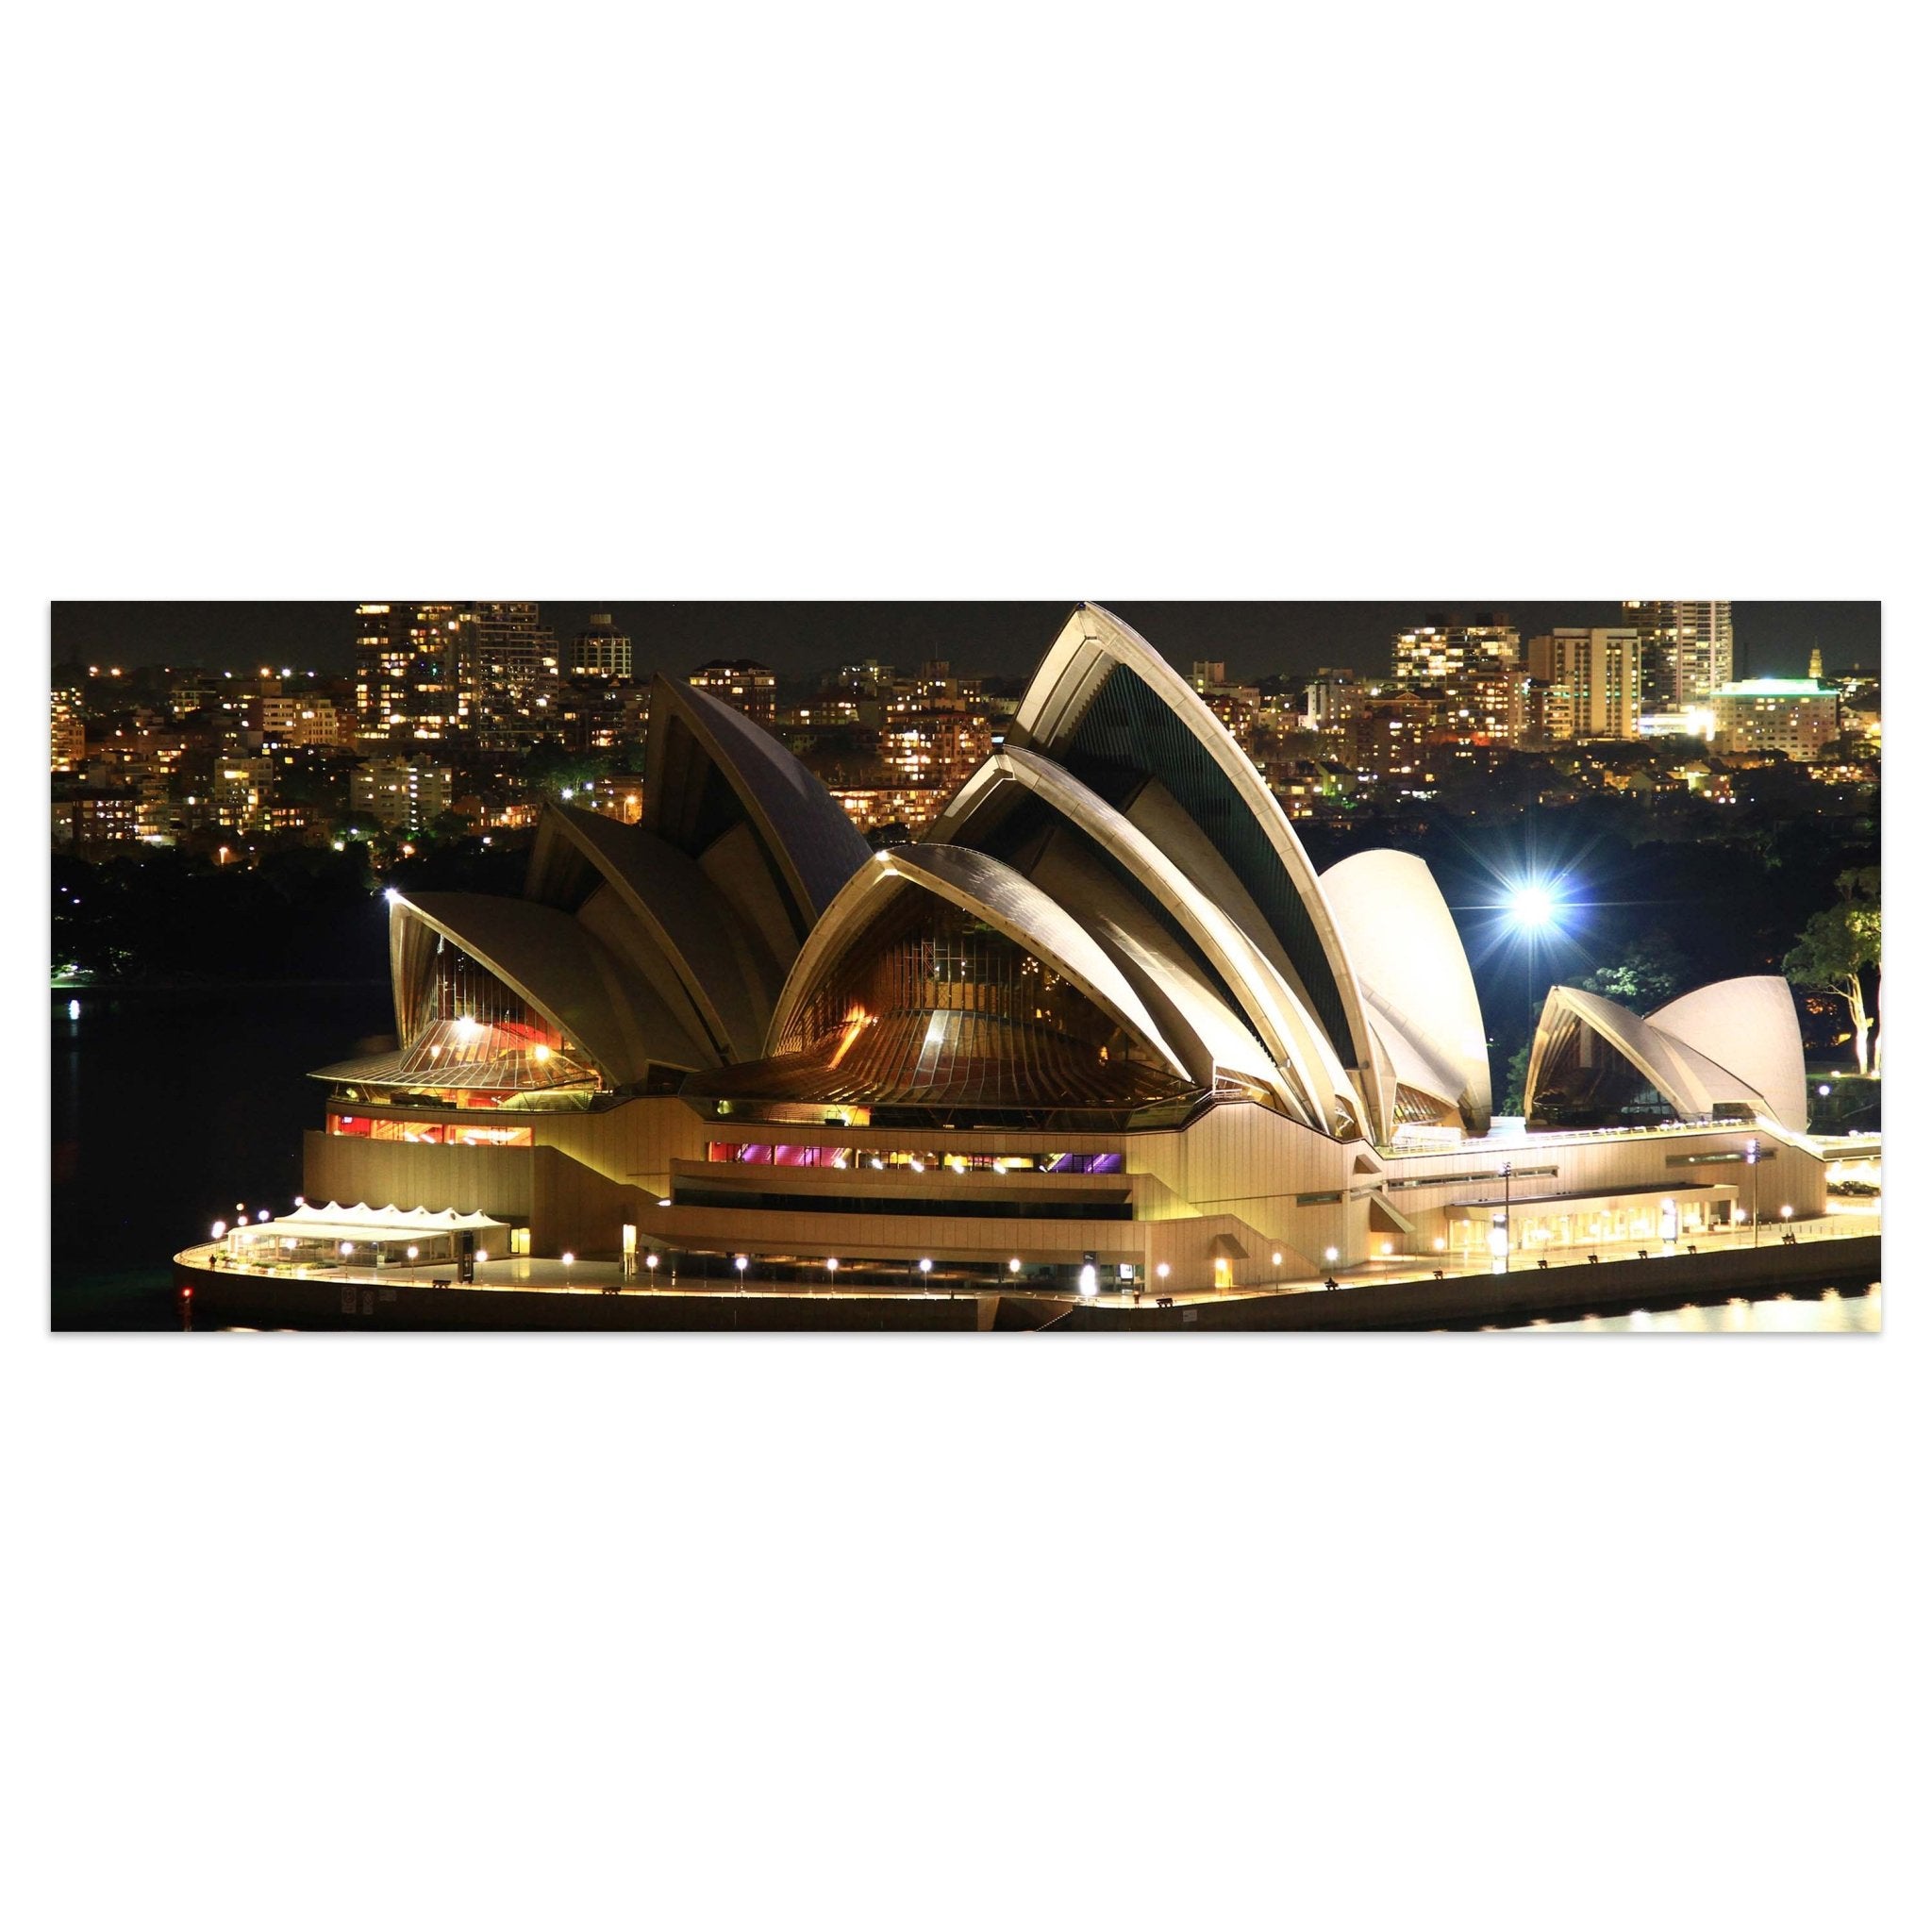 Leinwandbild Opera Australien M0220 kaufen - Bild 1